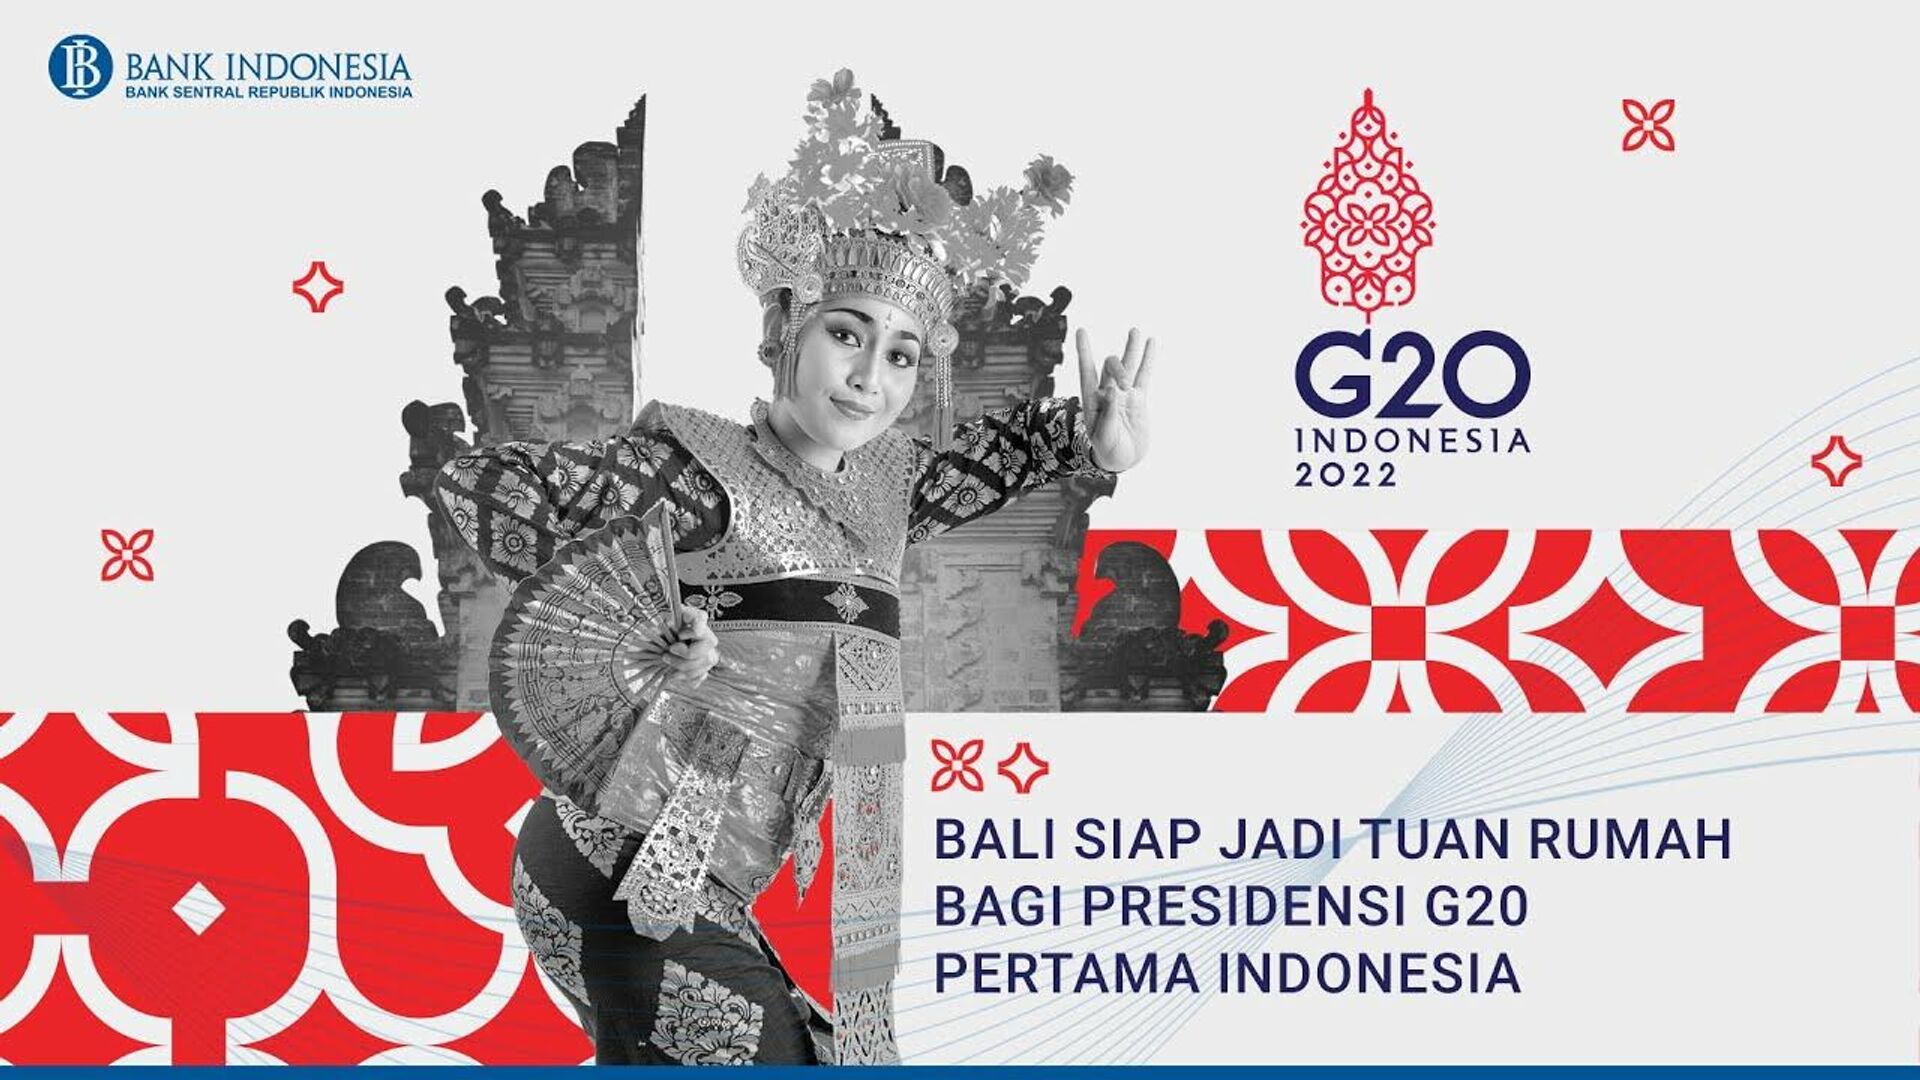 G20 Indonesia - Sputnik International, 1920, 23.03.2022